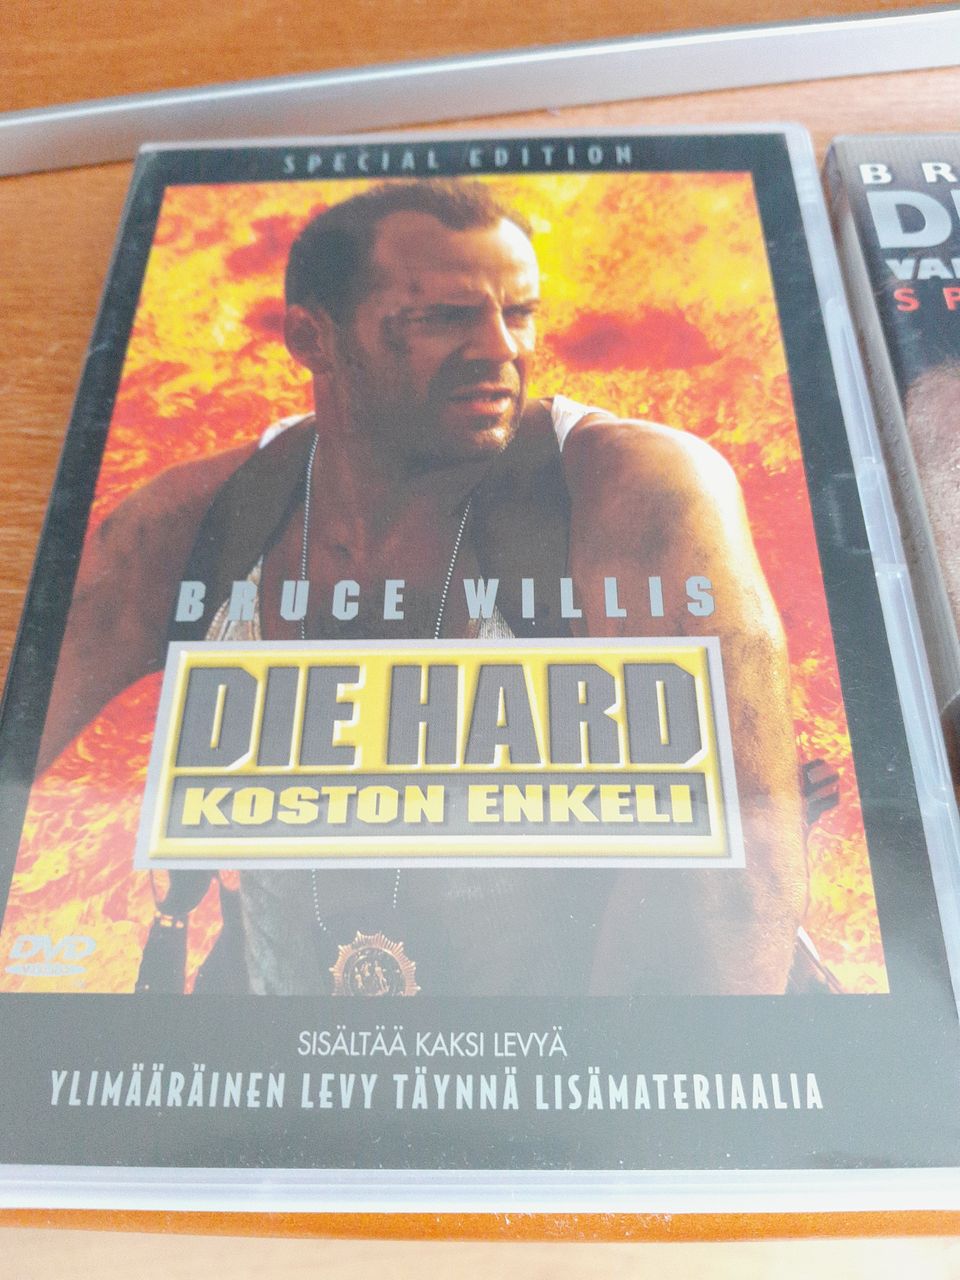 Die Hard tupla-dvd:t